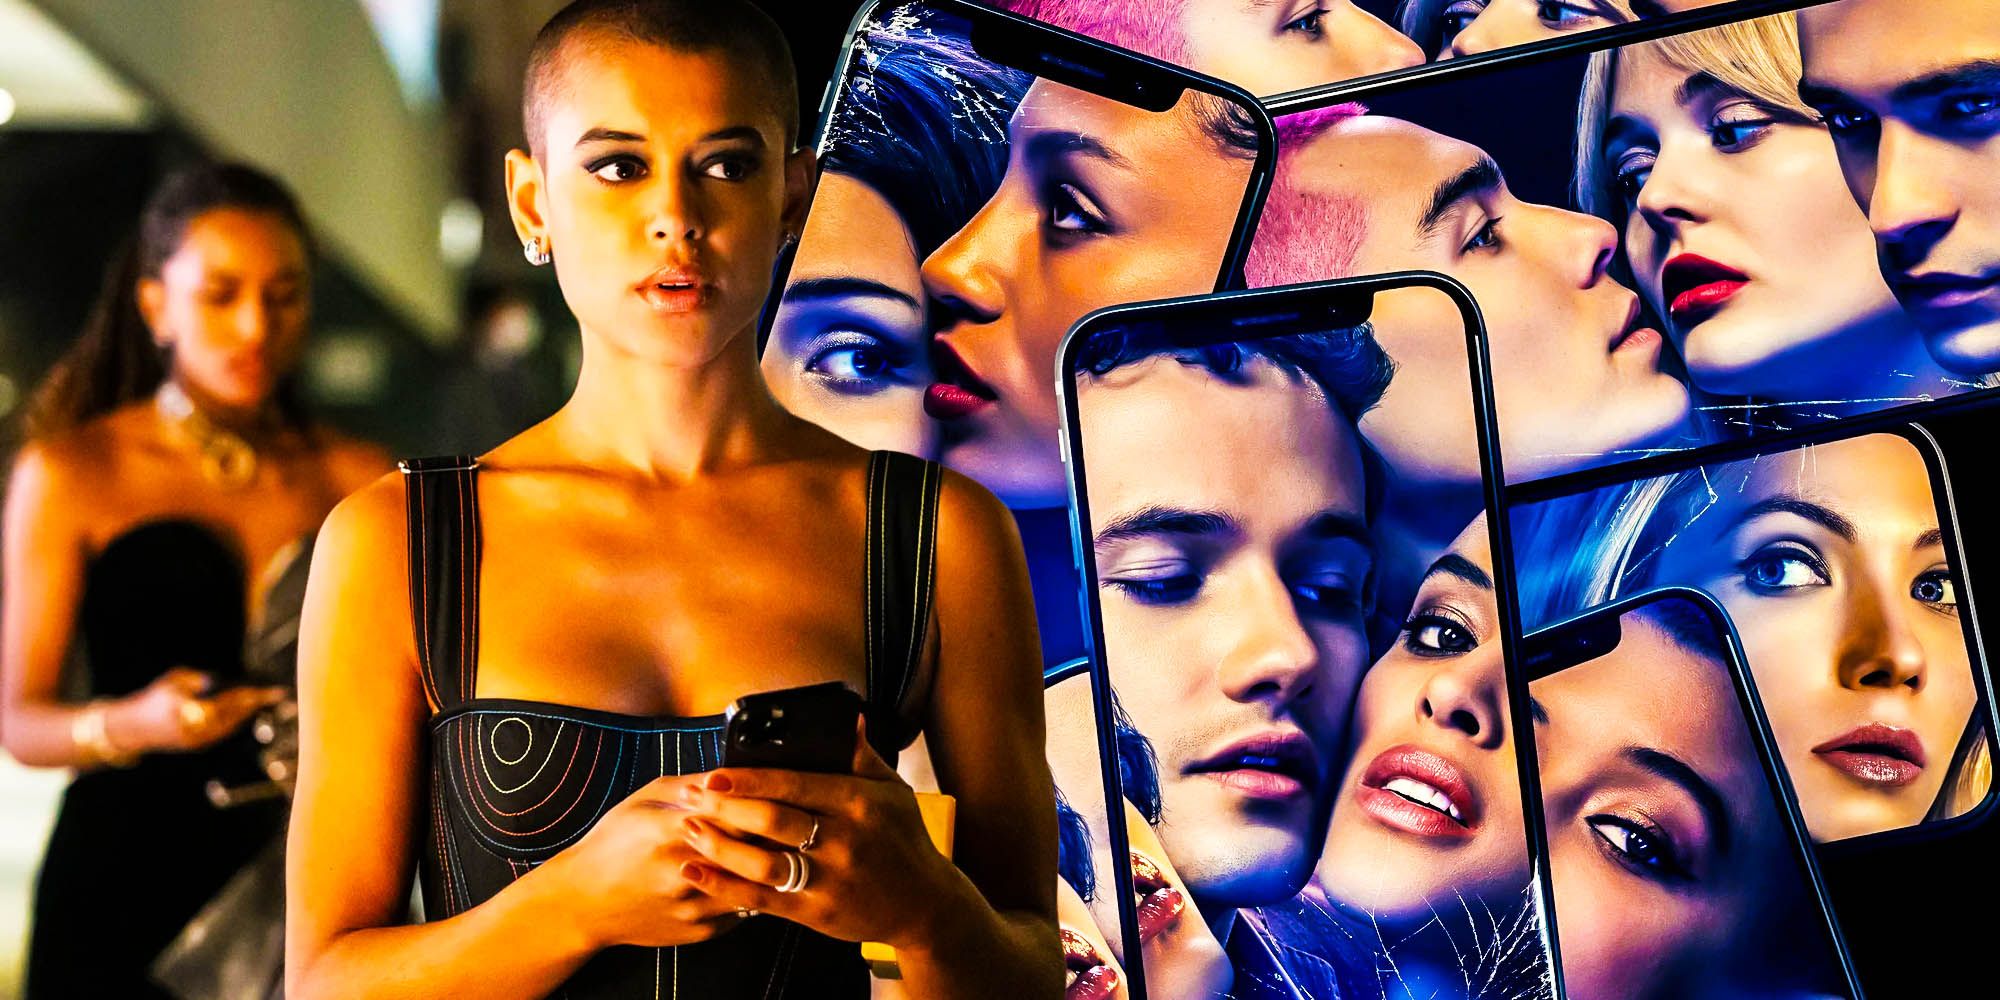 Split image of Jordan Alexander as Julien Calloway and mobile phones showing images of the Gossip Girl cast